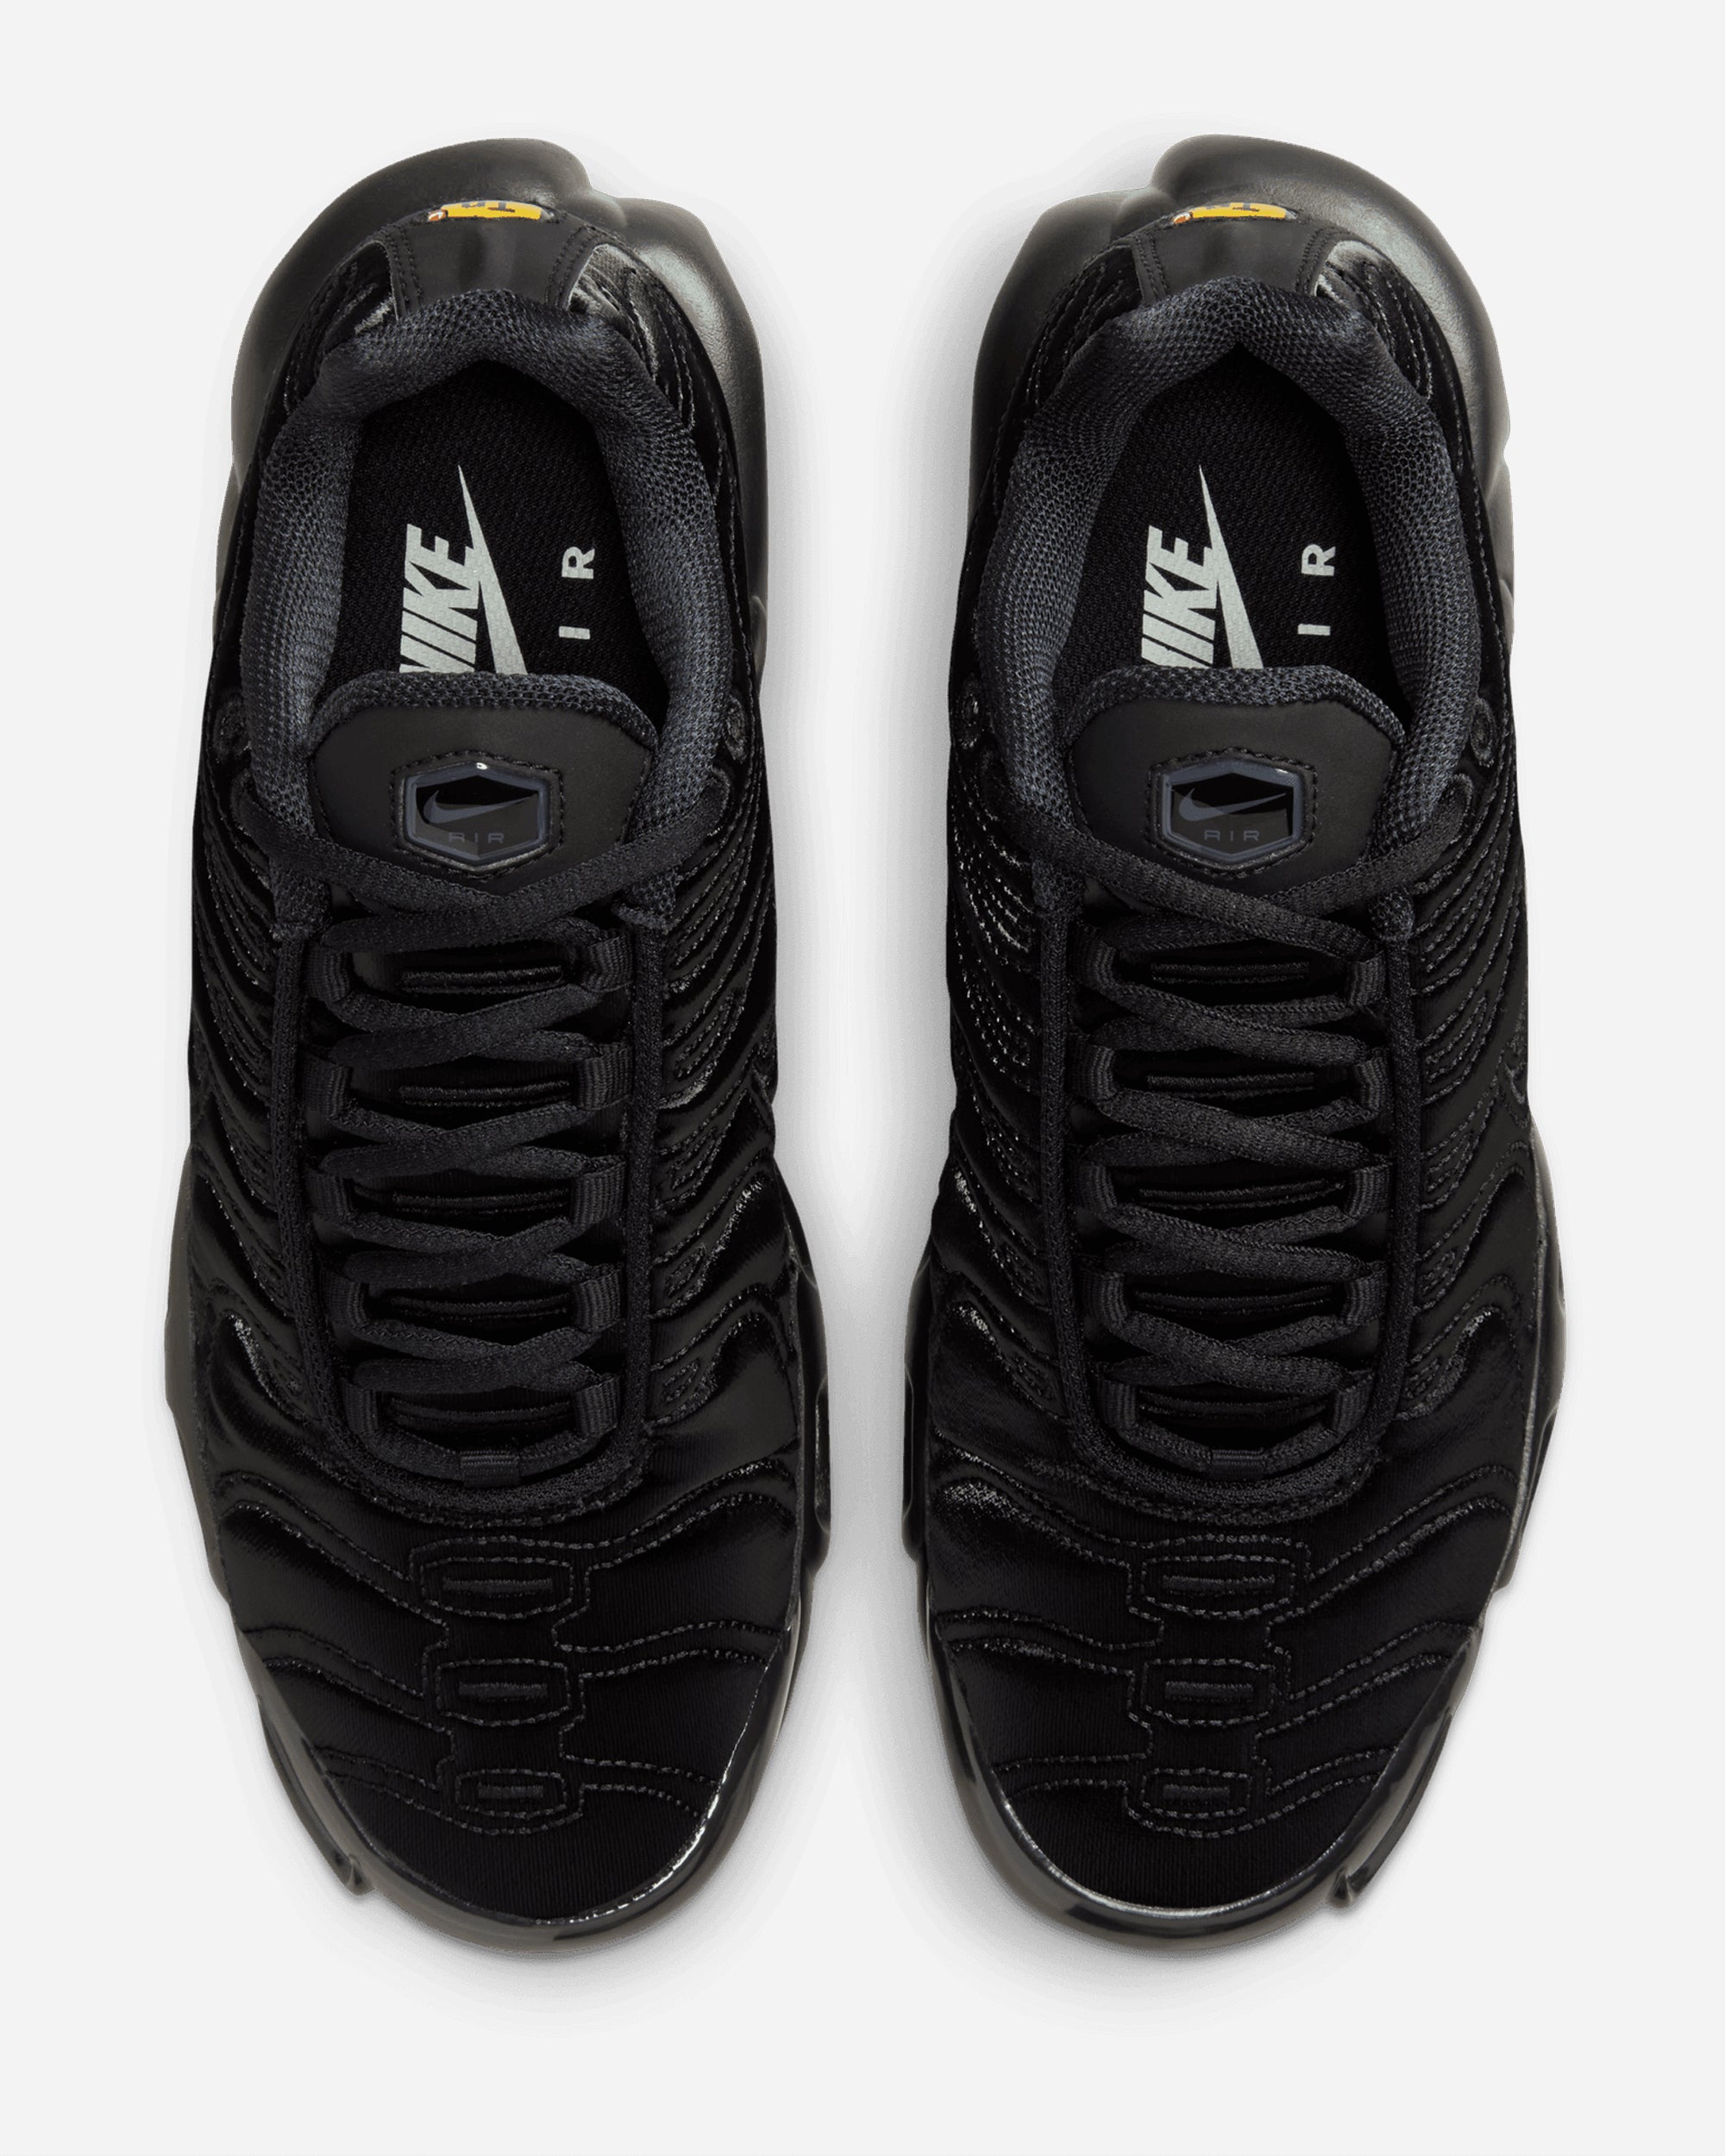 Nike Air Max Plus BLACK/BLACK-ANTHRACITE-SAIL FV1169-001